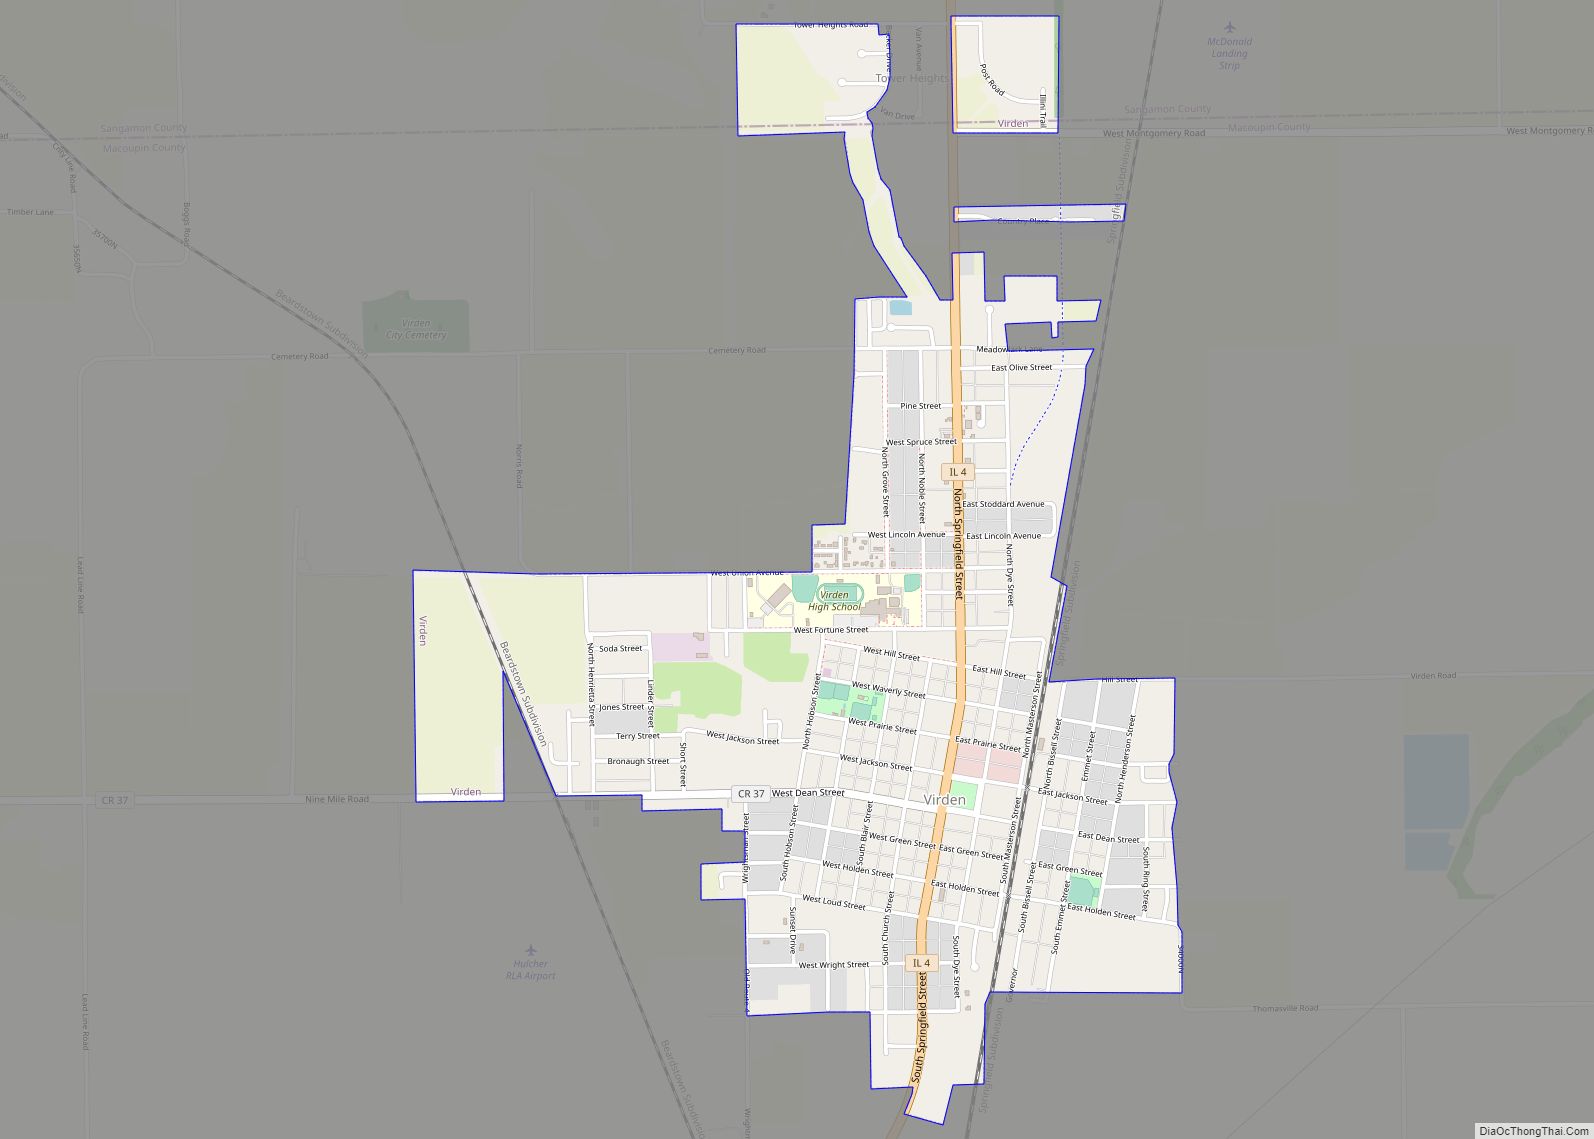 Map of Virden city